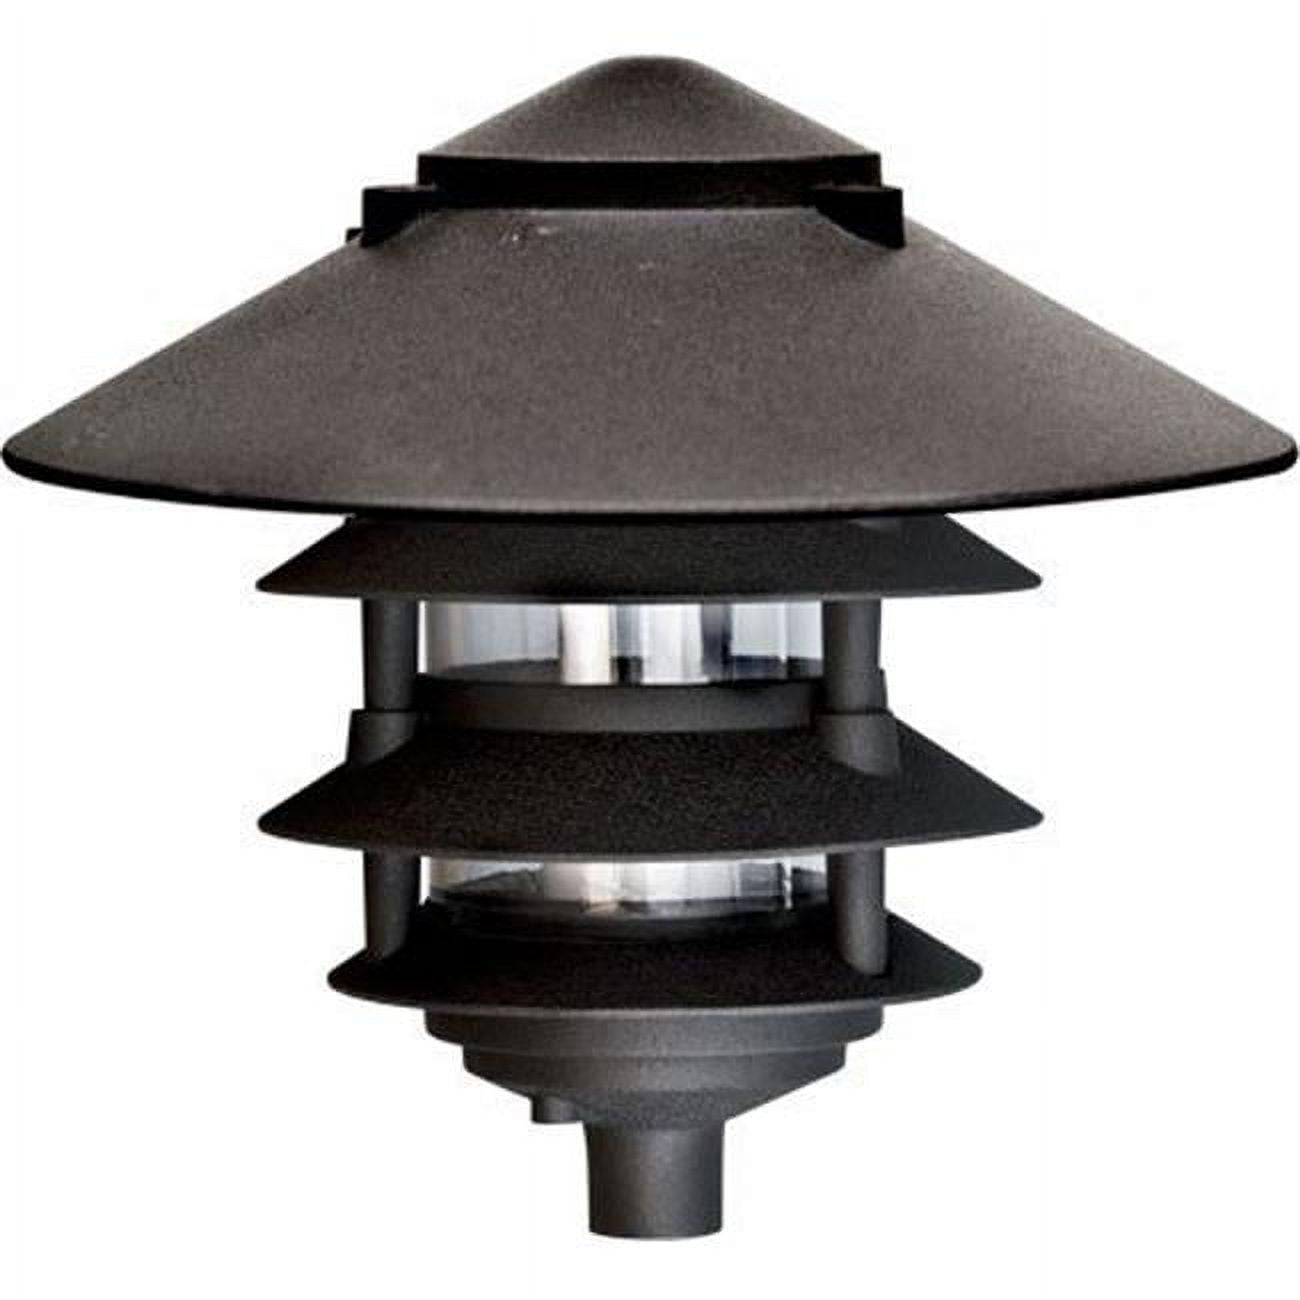 0.5 In. Four Tier Pagoda Light - 7w 120v, Bronze